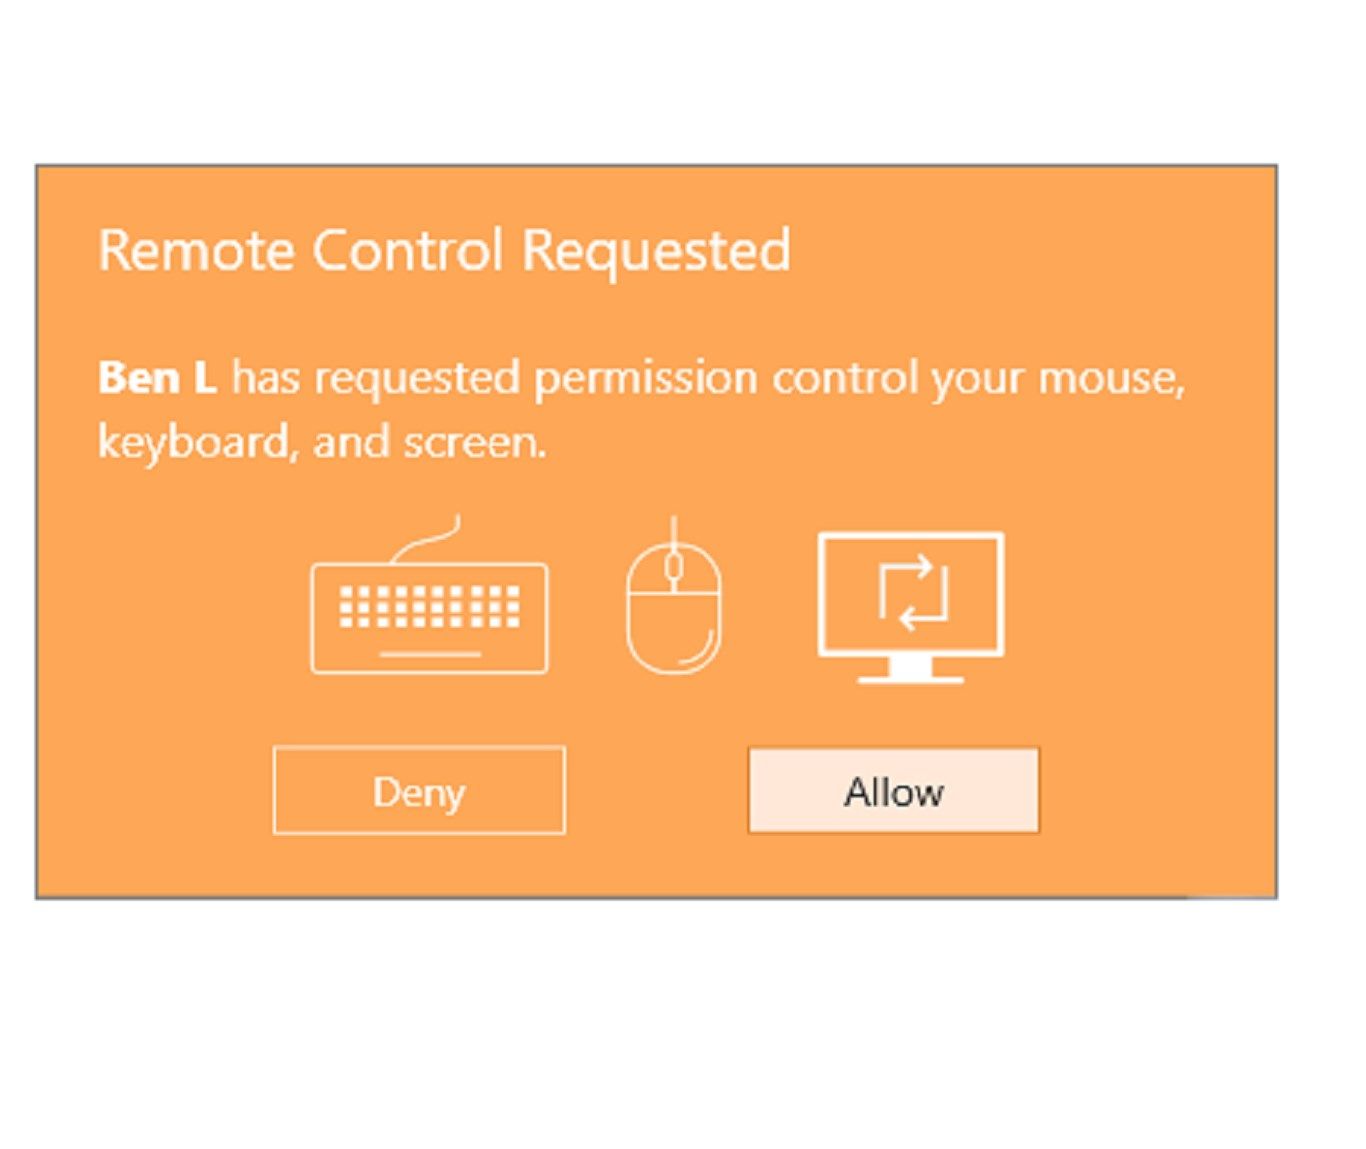 User has control over remote control